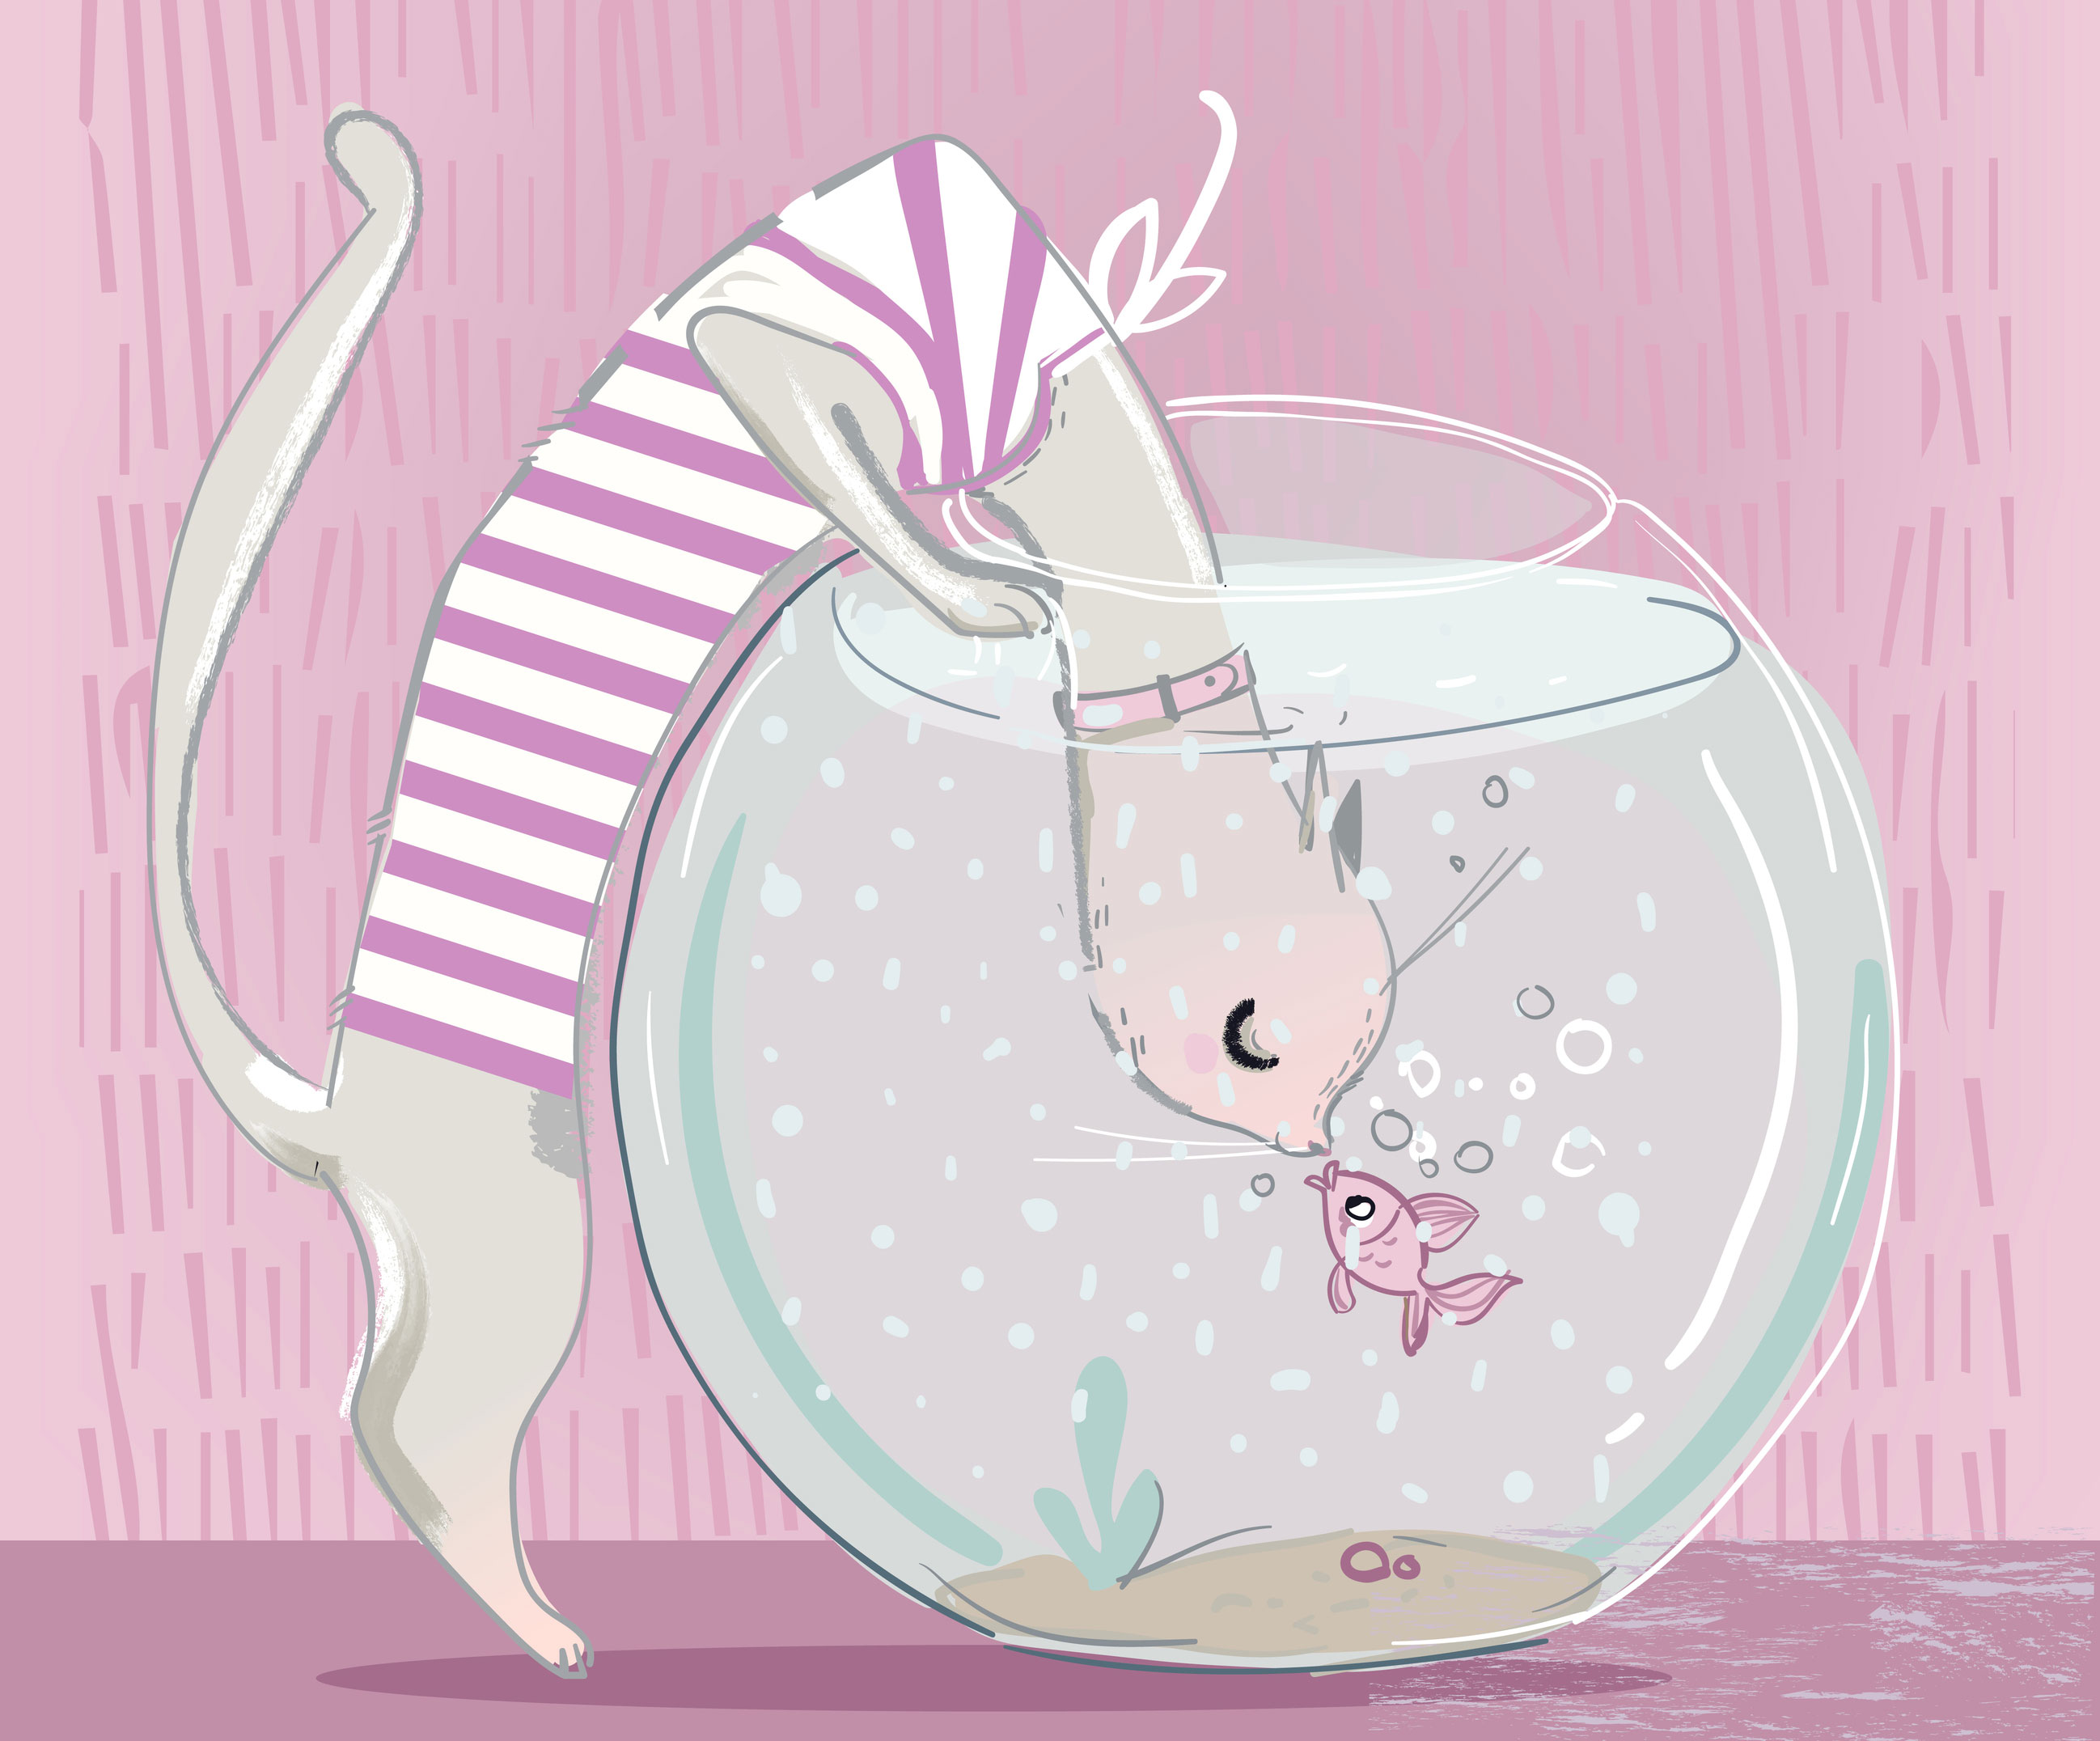 cat drinking fish tank water